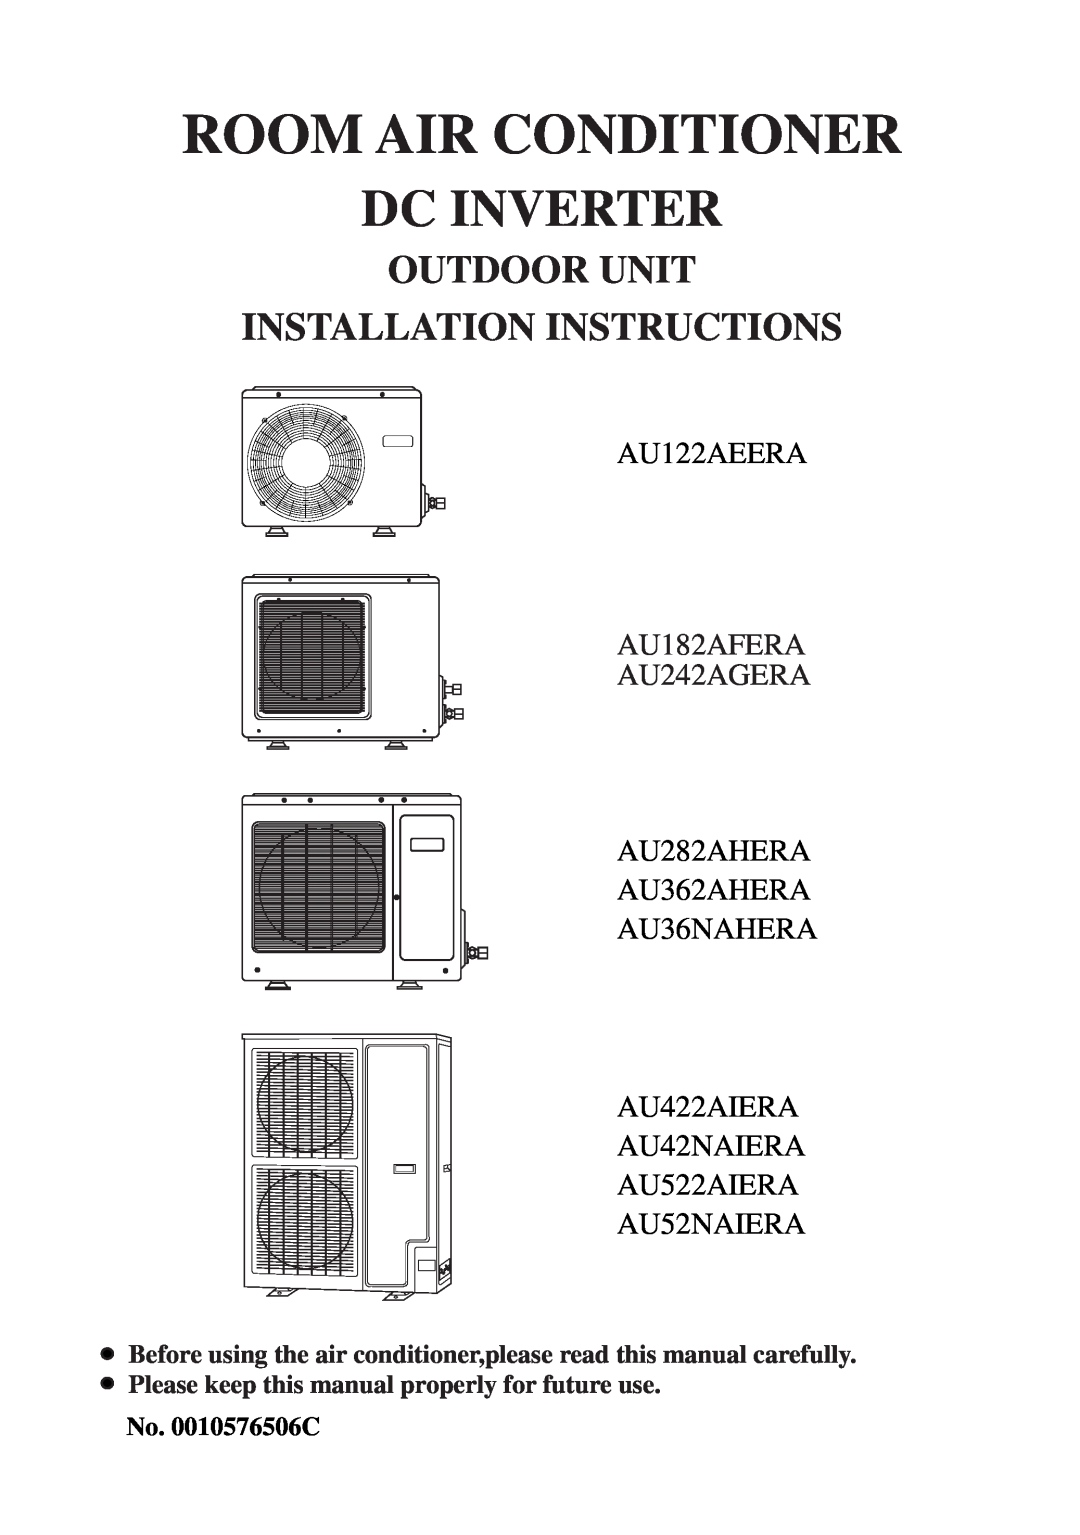 Haier AU36NAHERA installation instructions Outdoor Unit Installation Instructions, AU522AIERA AU52NAIERA, No. 0010576506C 